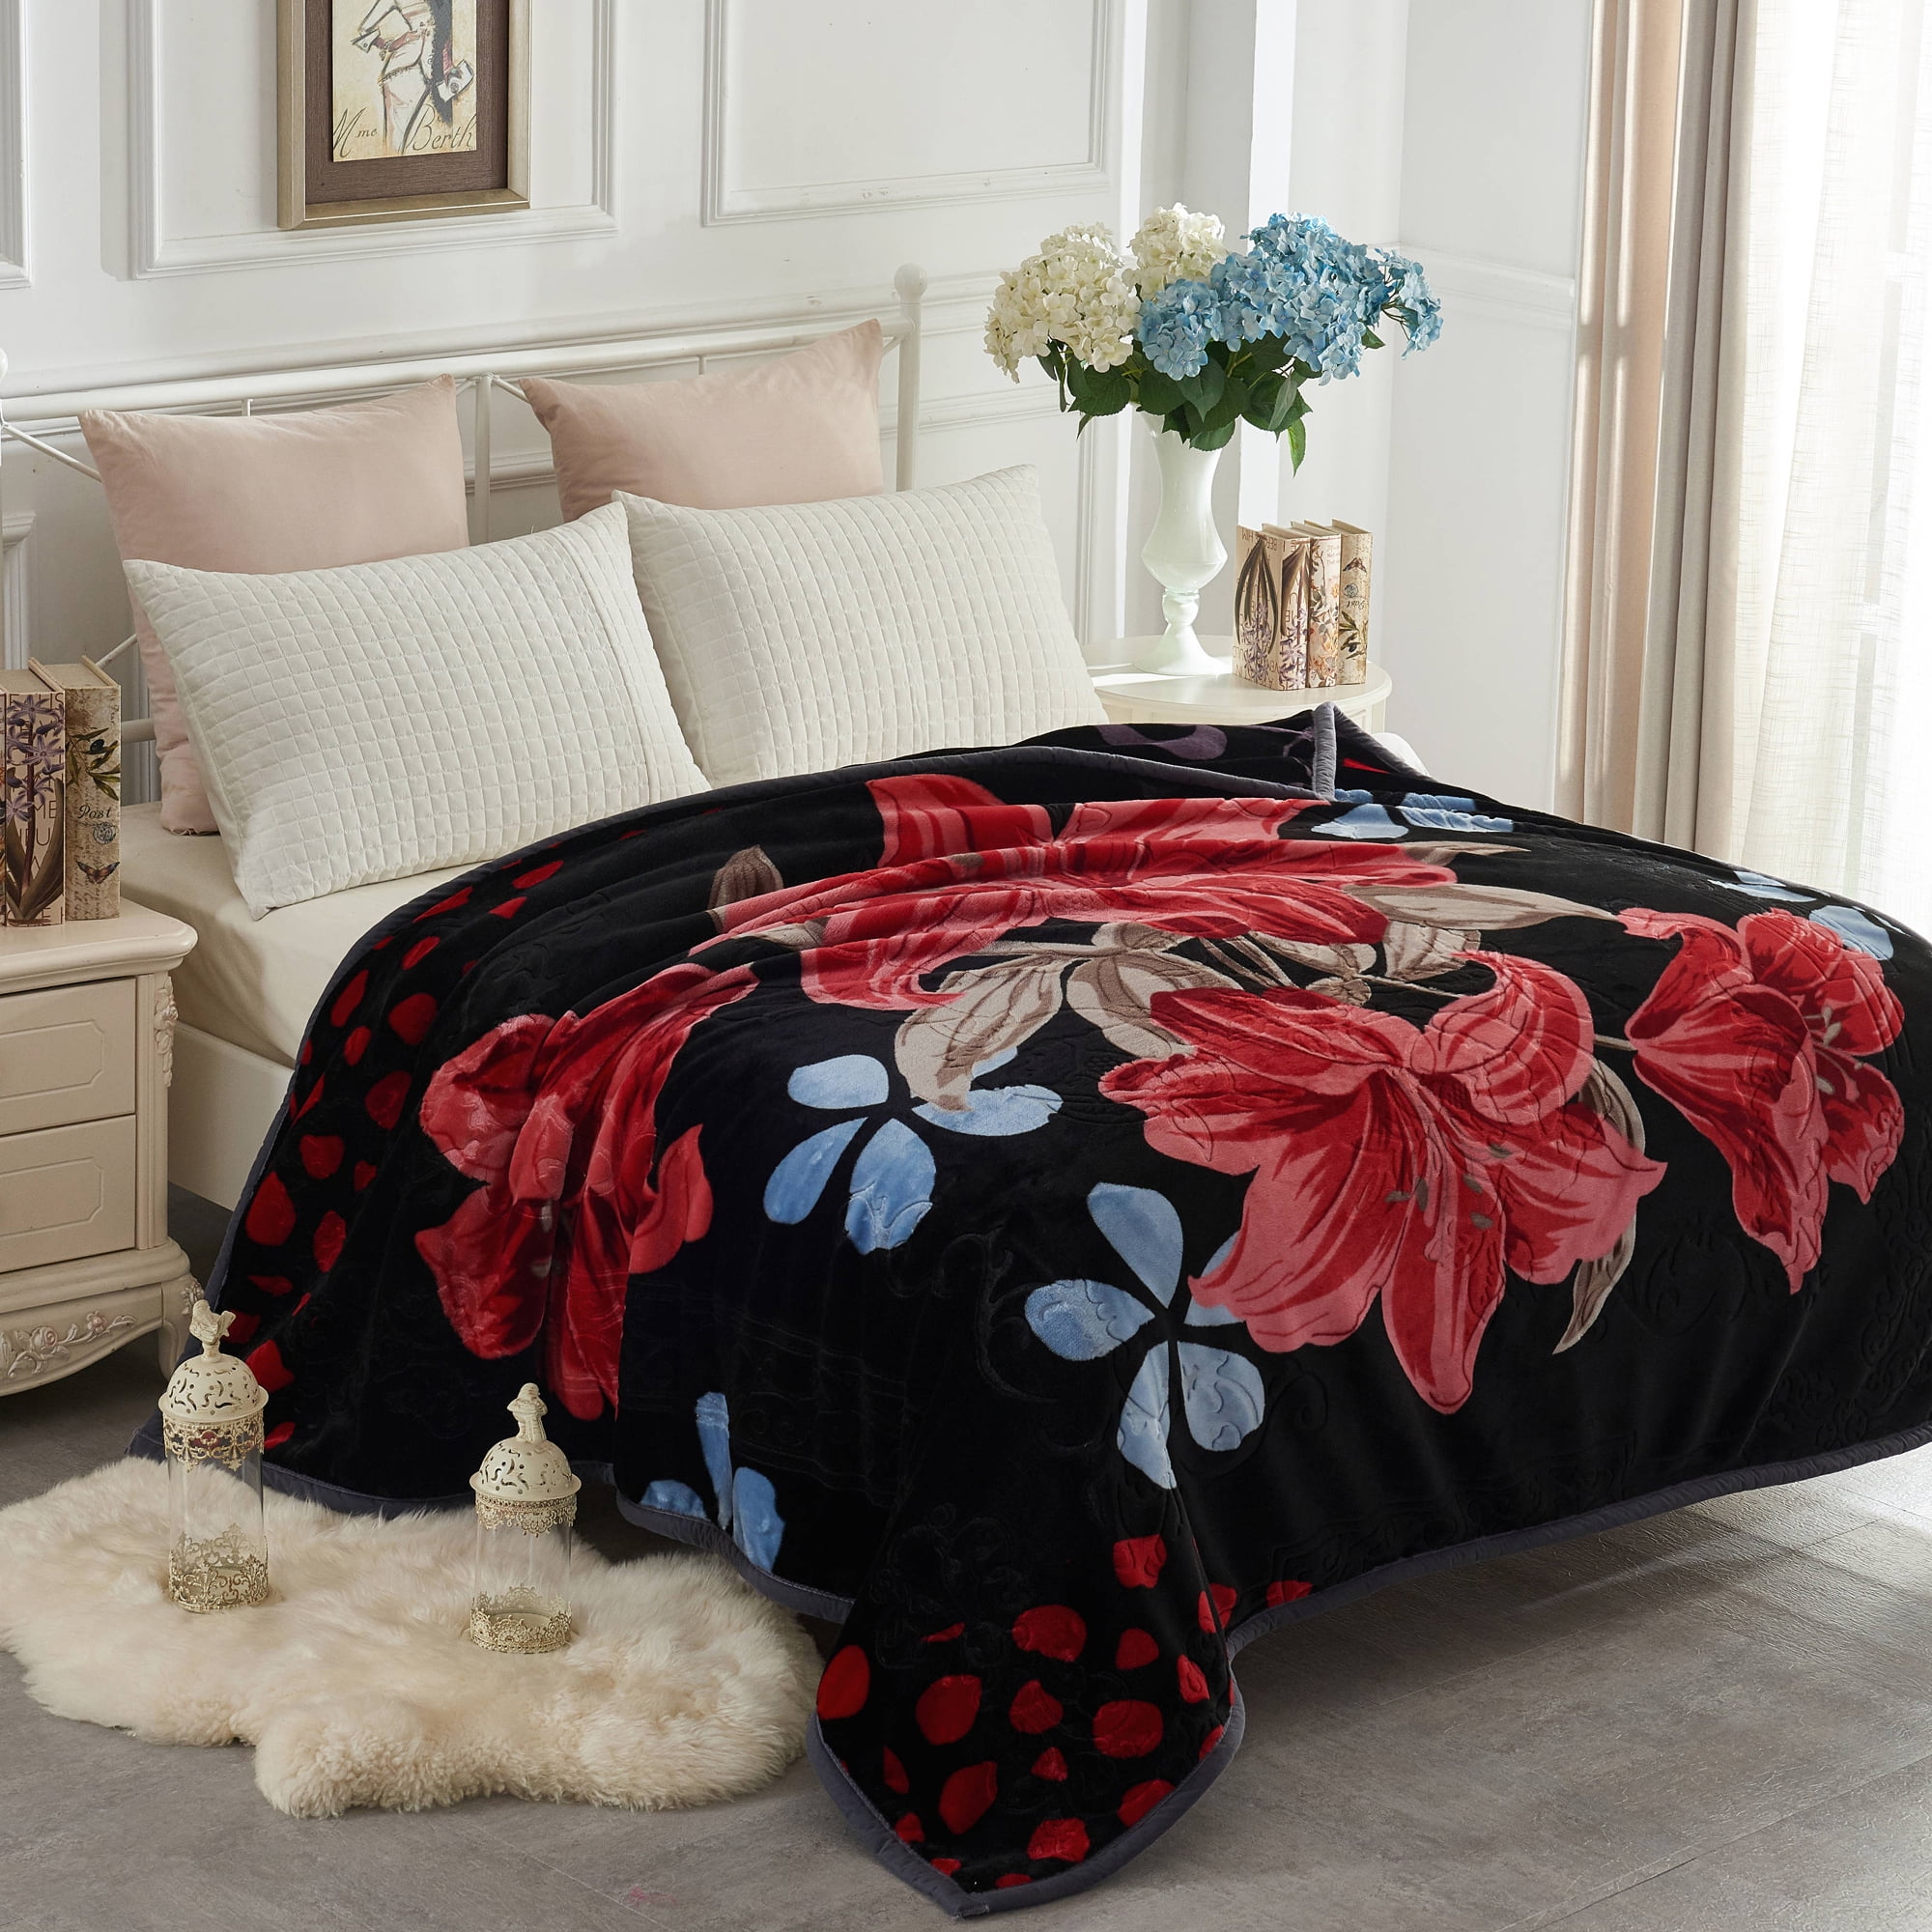 Reversible Heavy Blanket 2 Pattern Design Super Soft Warm For Winter Gift King 